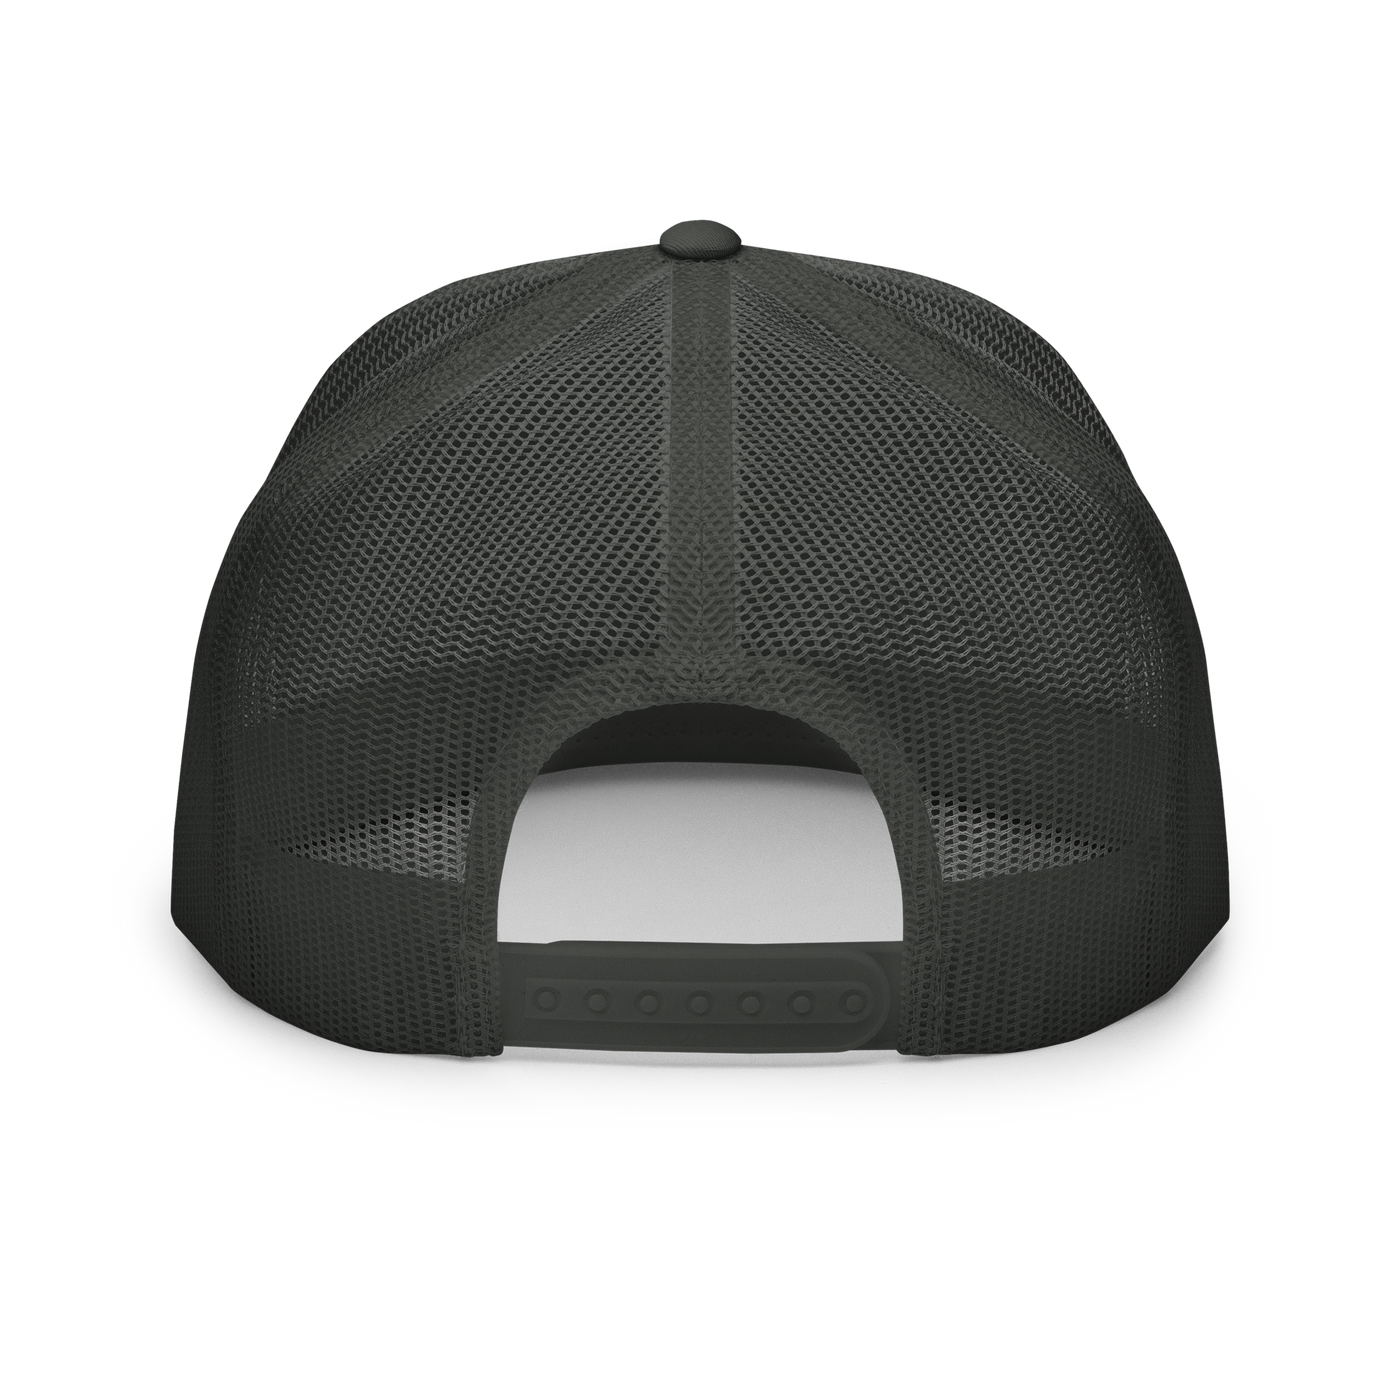 CZT DNC Neon Monochrome Contemporary Monotone Snap-back Trucker Hat